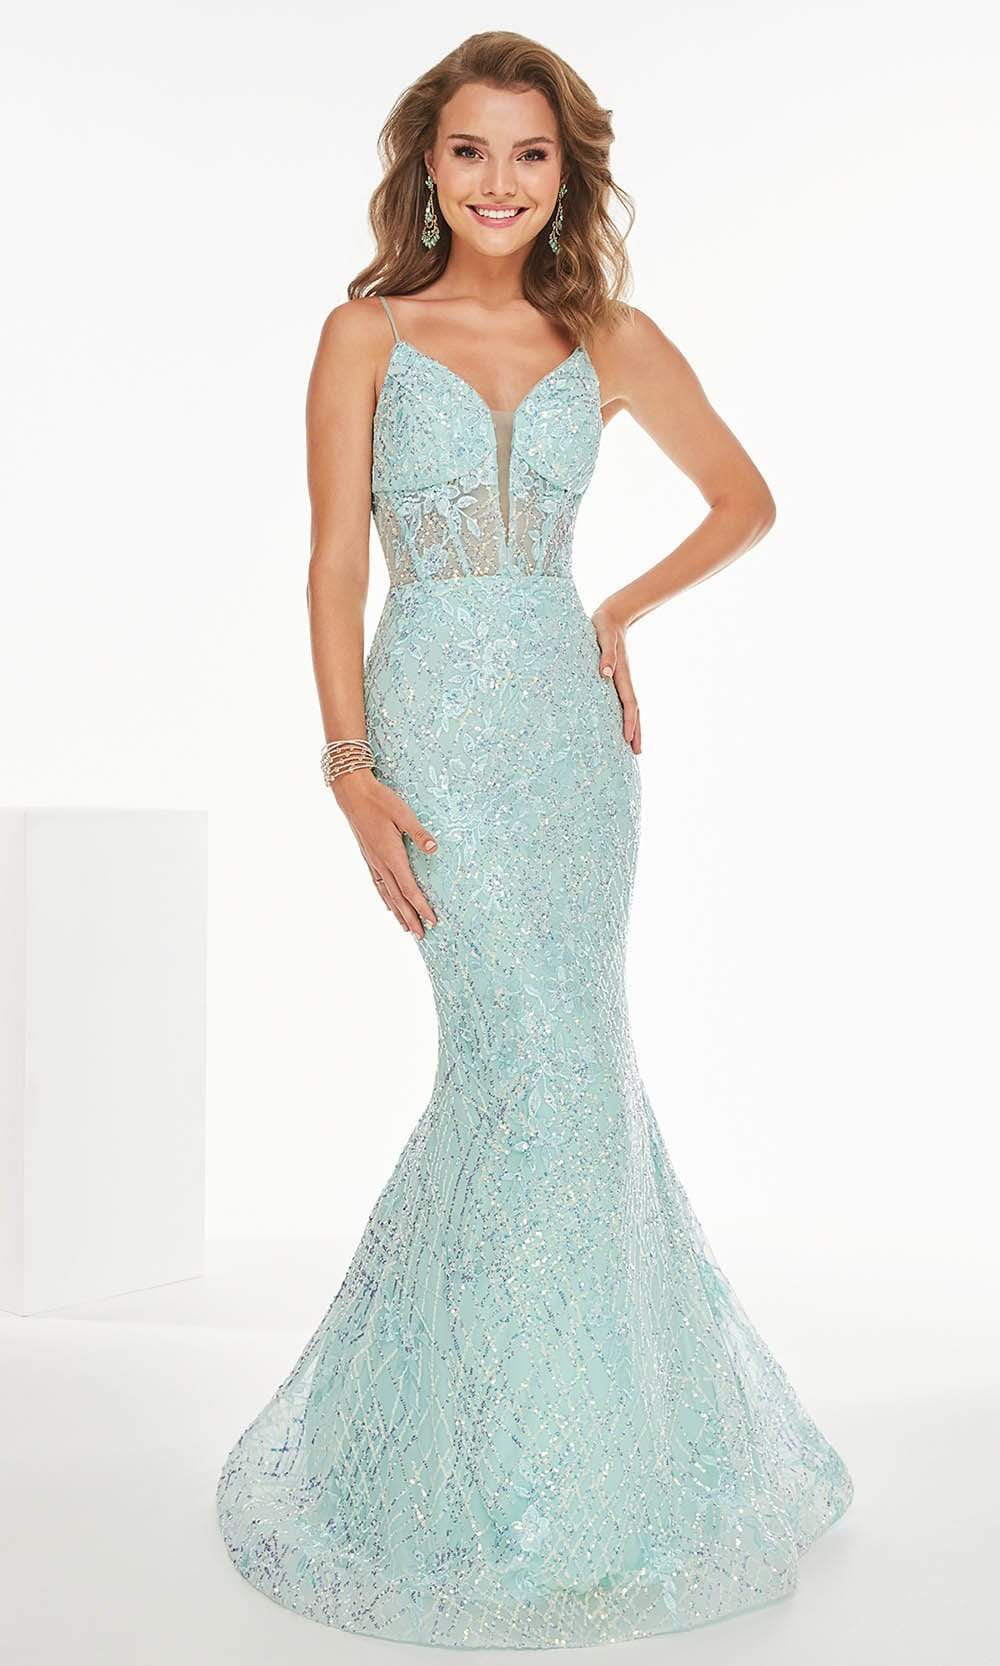 Tiffany Exclusive - 46235 Sequined Plunging Mermaid Gown Evening Dresses 0 / Aqua